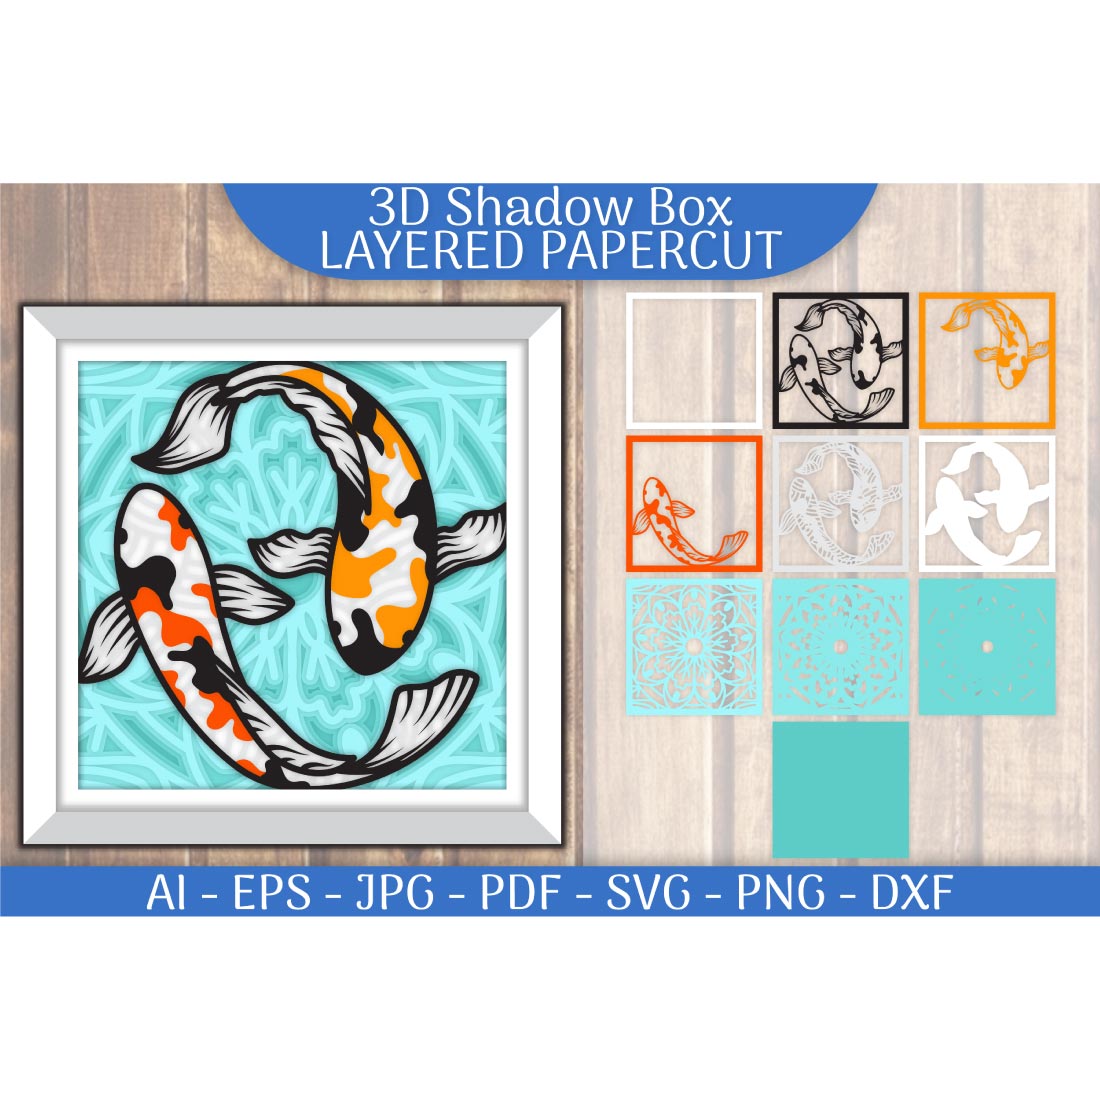 Koi Fish 3D Shadow Box Layered Papercut cover image.